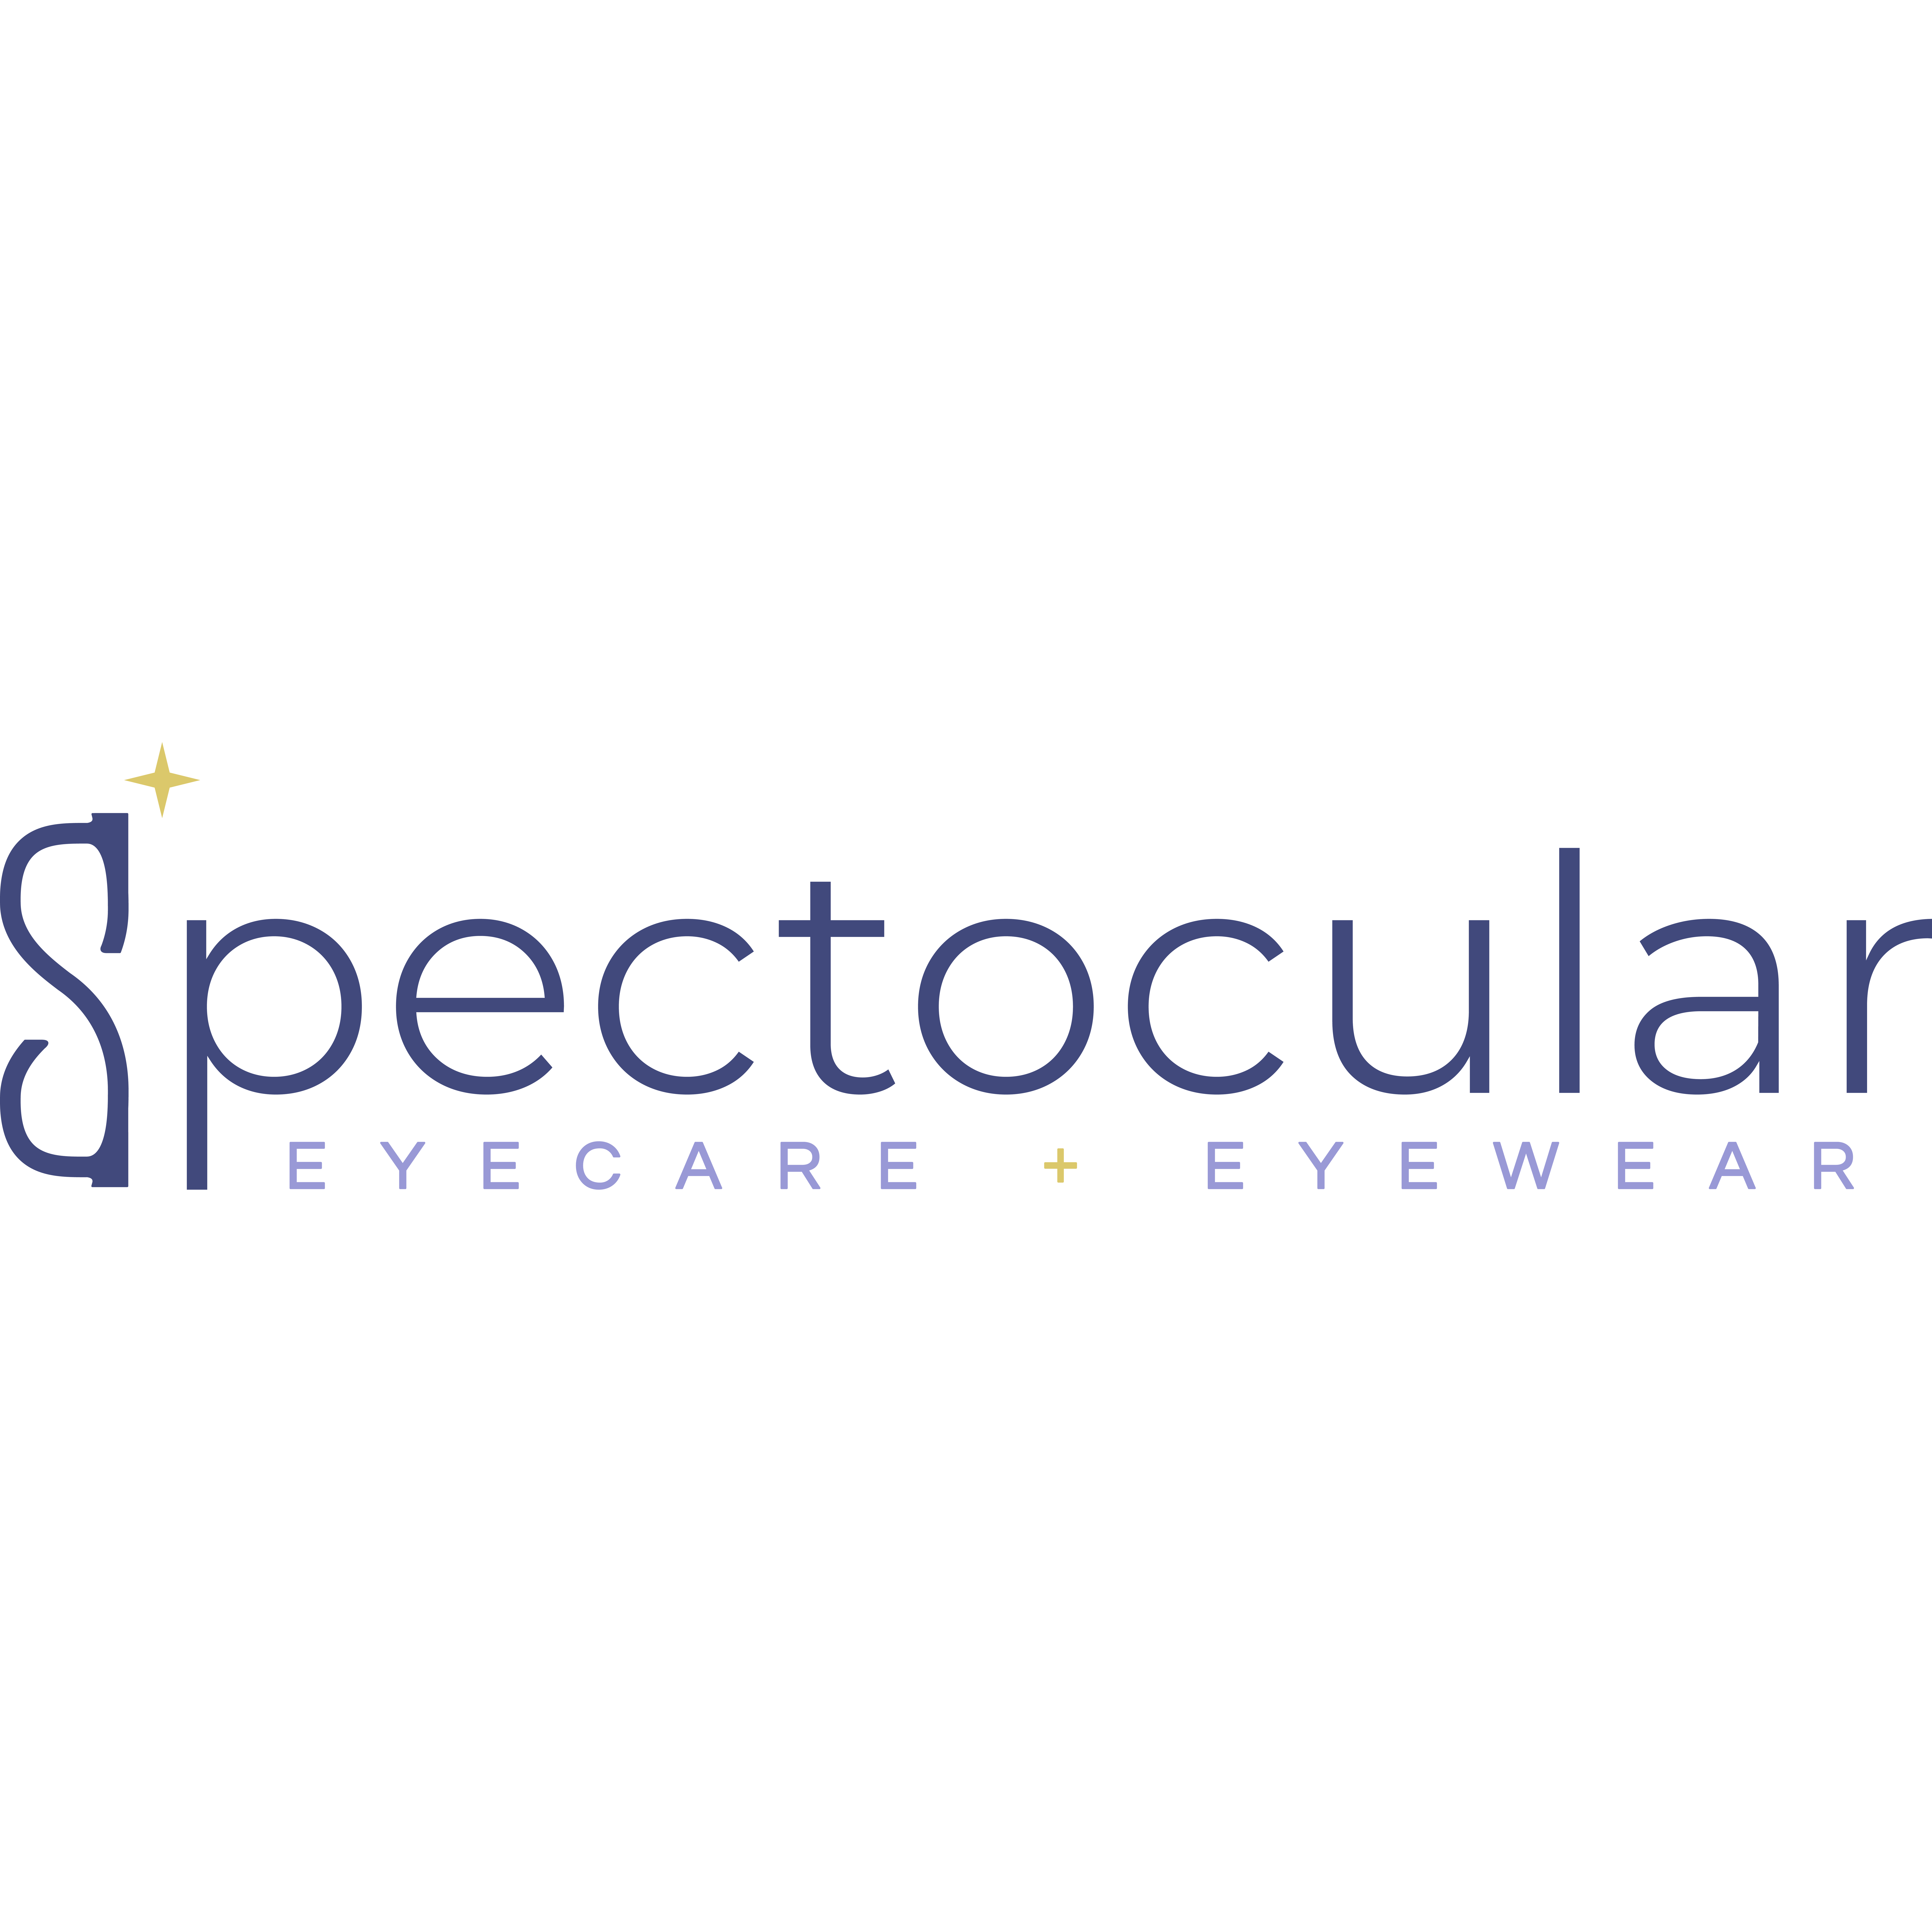 Spectocular Eyecare + Eyewear Irving (972)258-2020